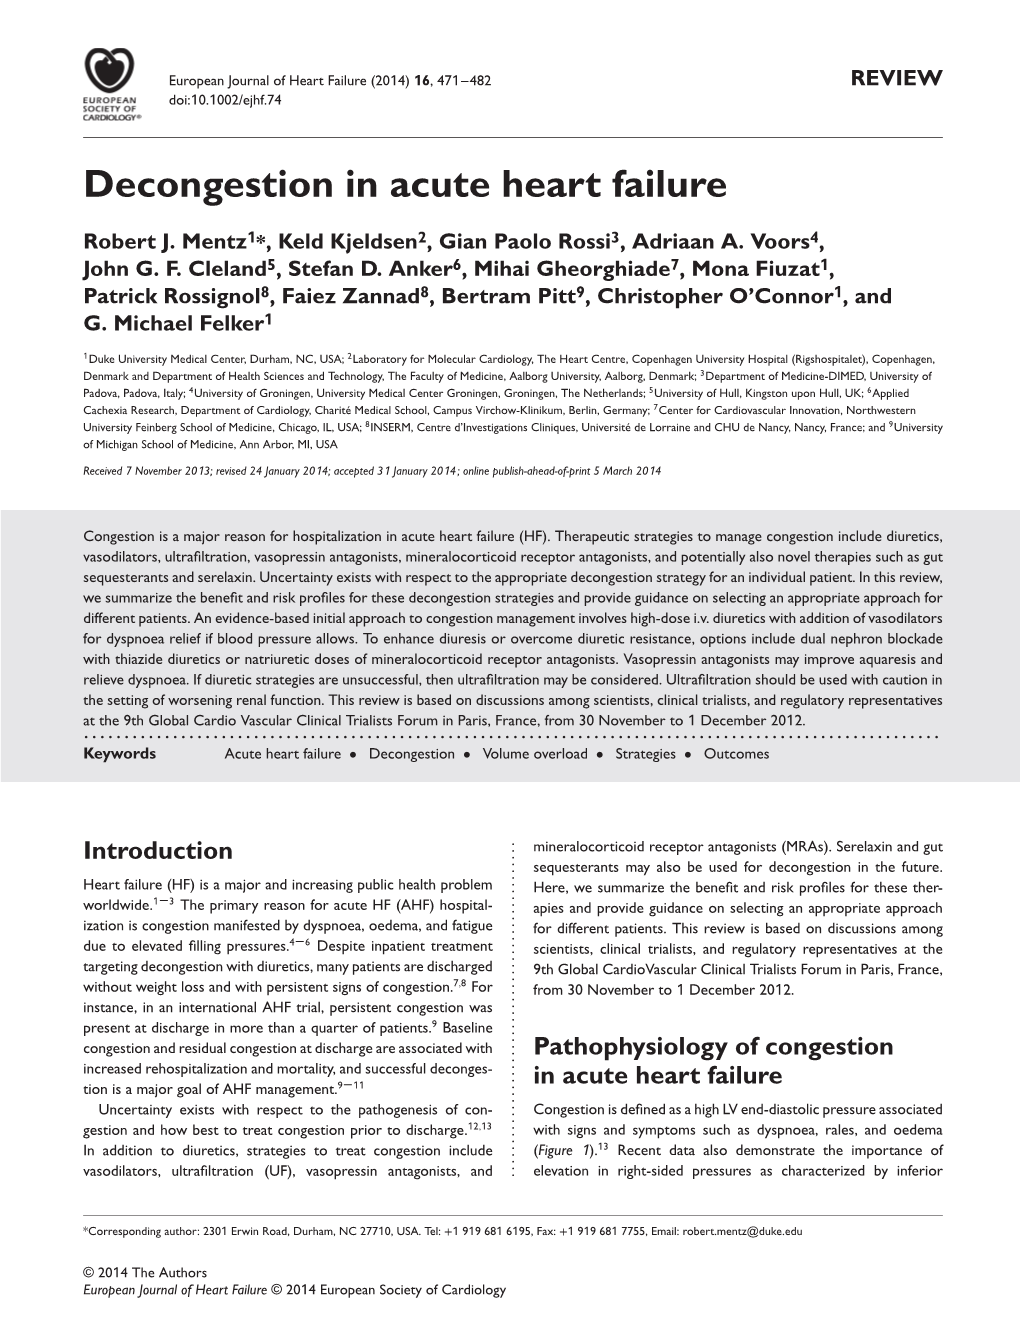 Decongestion in Acute Heart Failure